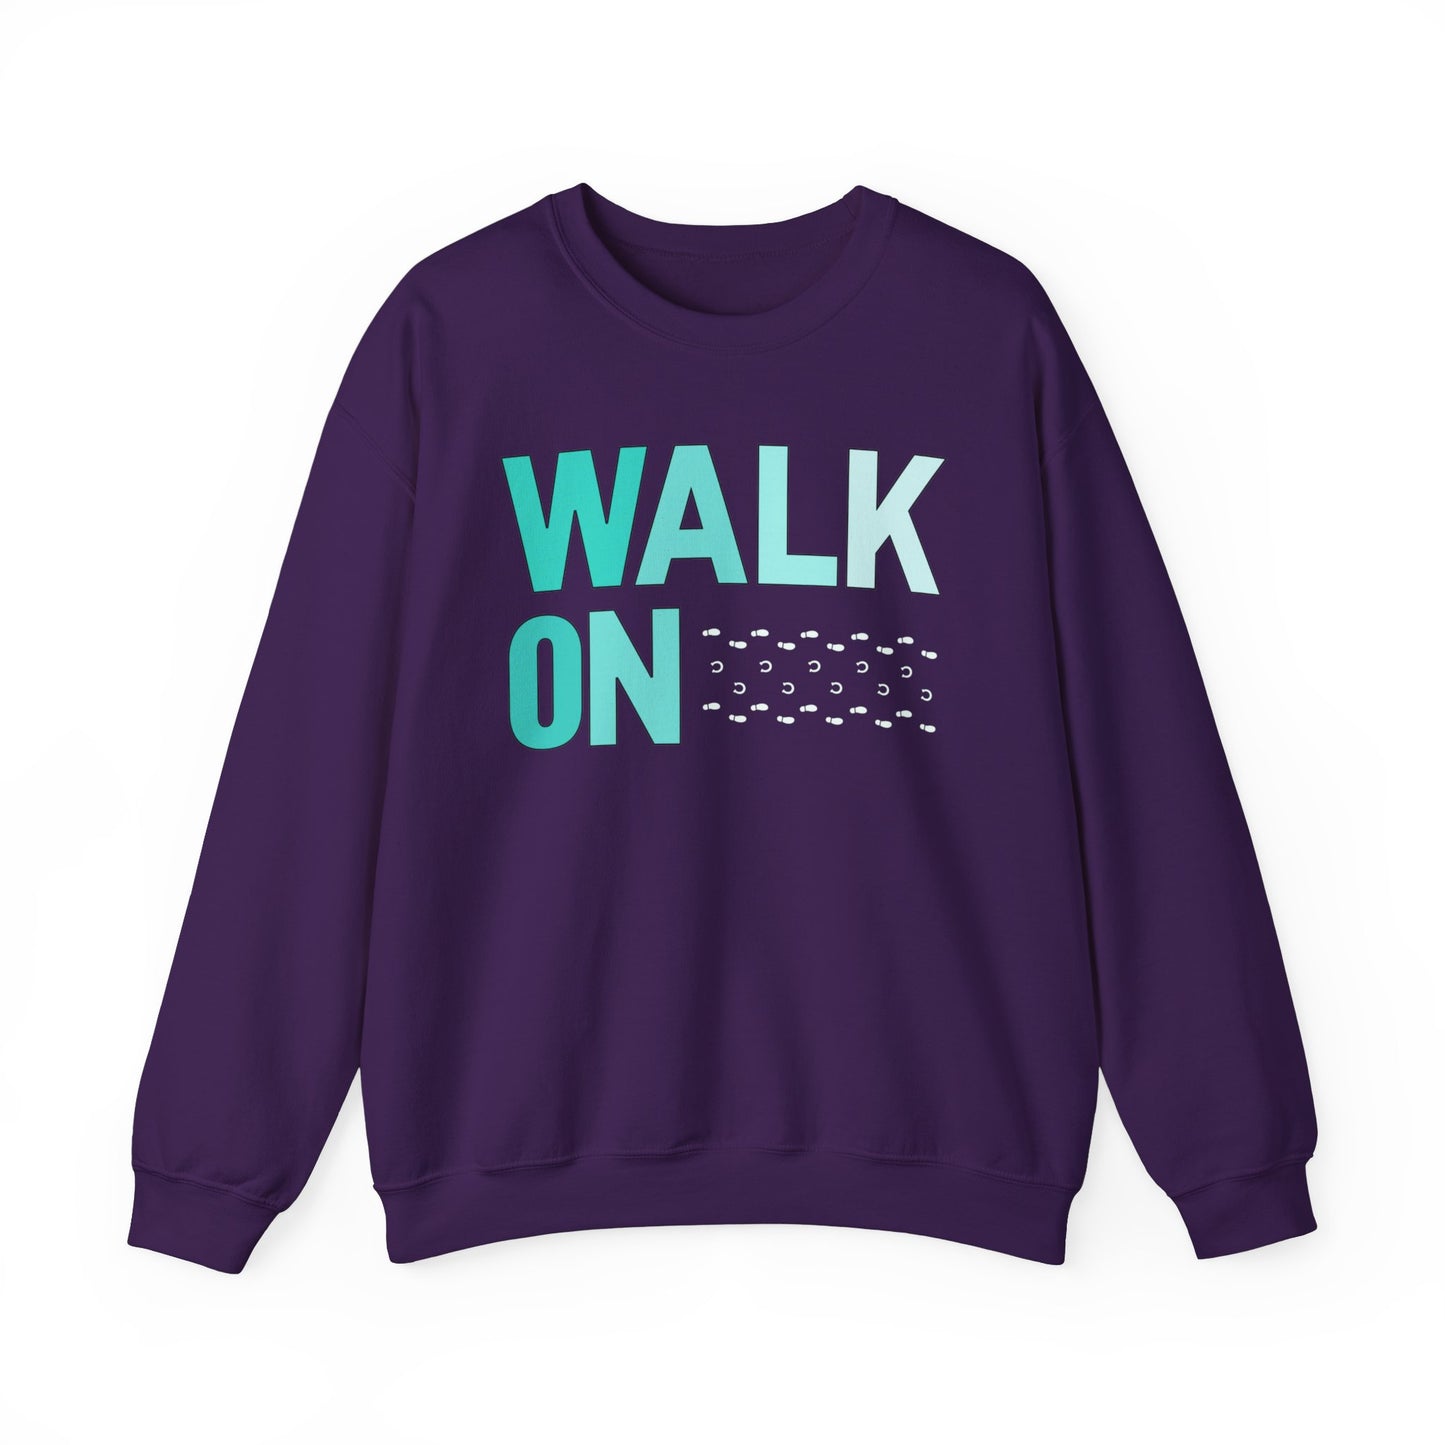 WALK ON - hoof and foot prints - unisex crewneck sweatshirt